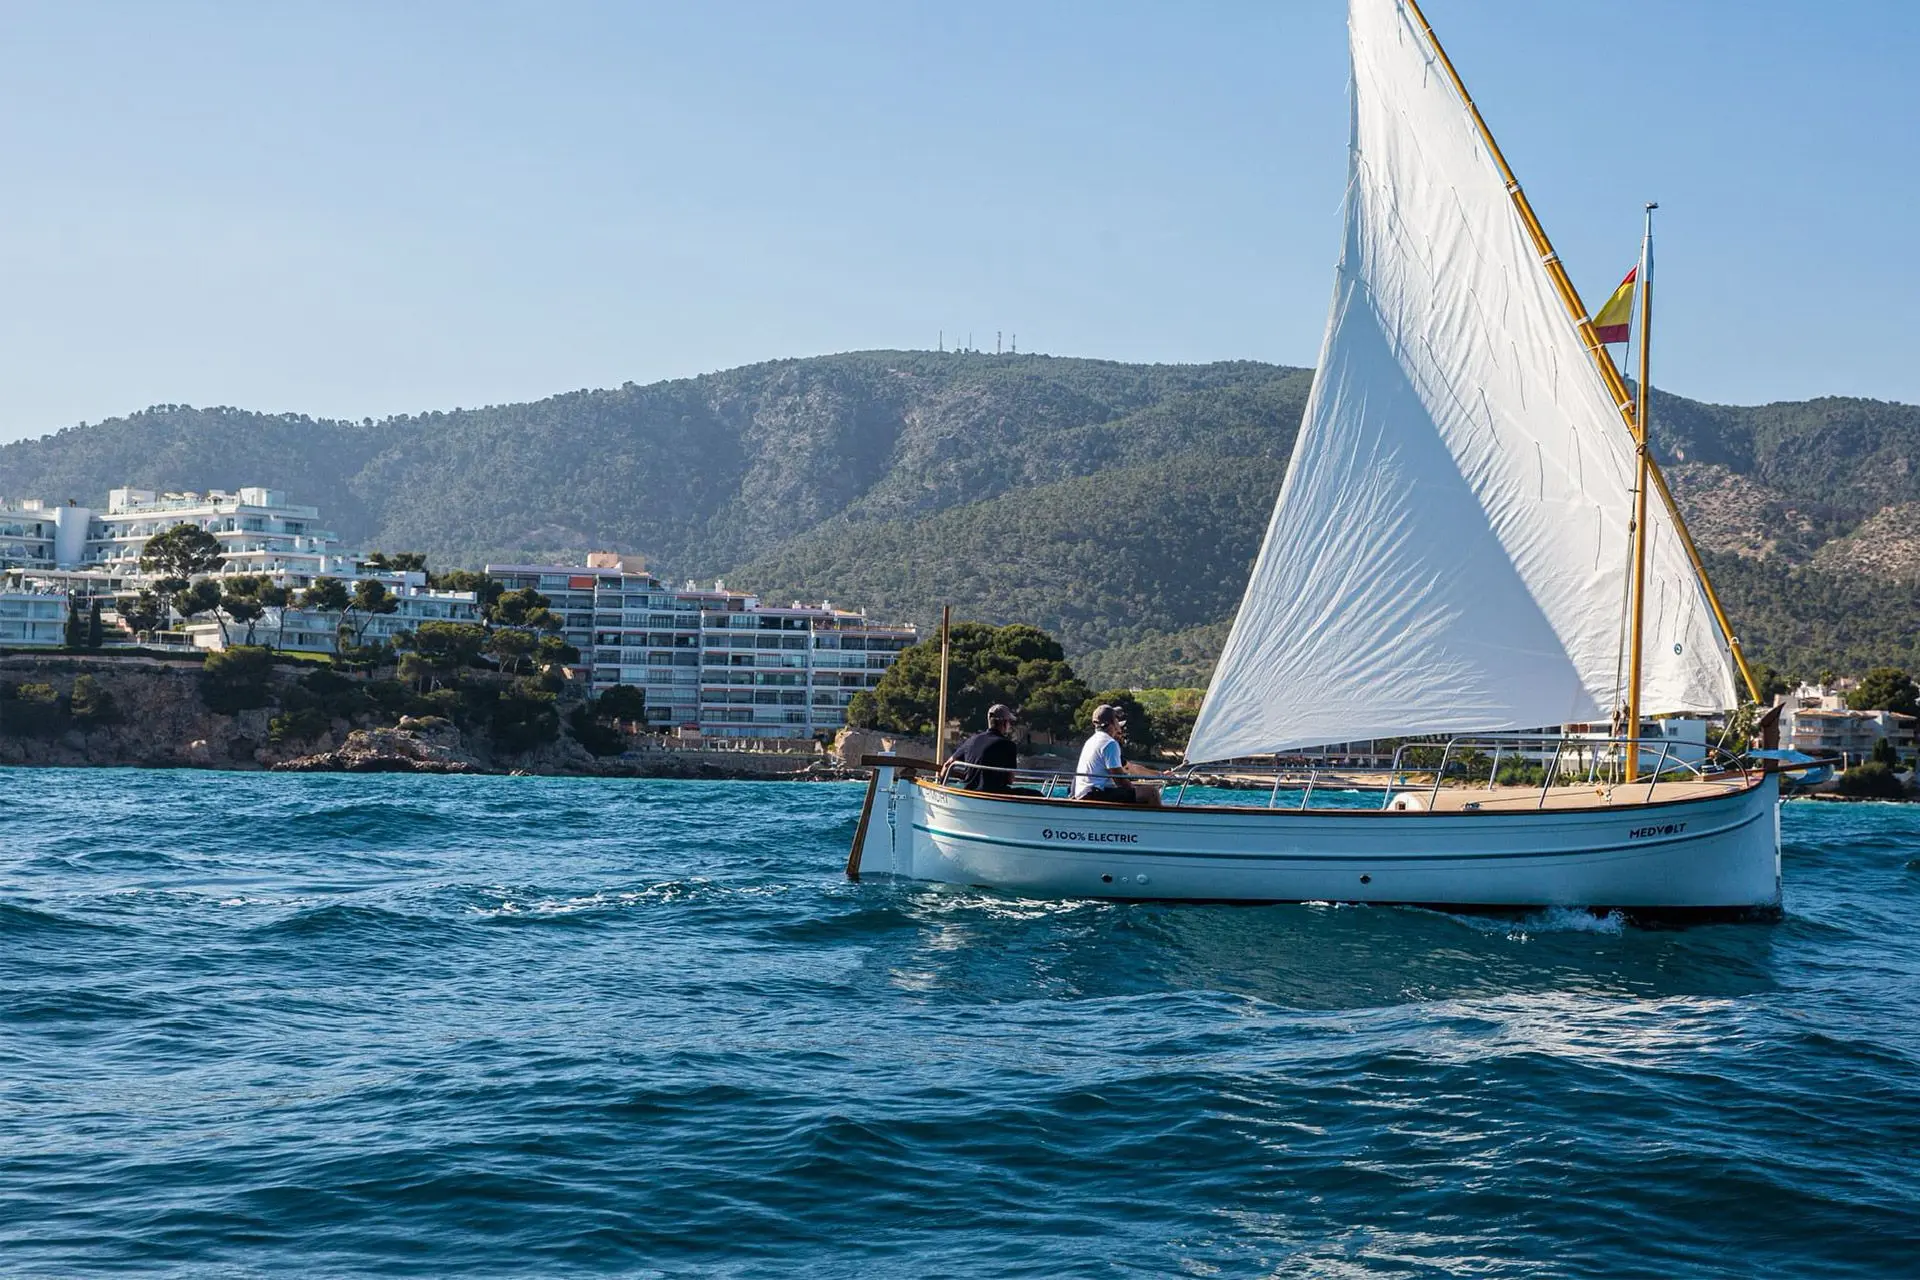 Llaut navegando con vela desplegada frente a la costa mallorquina